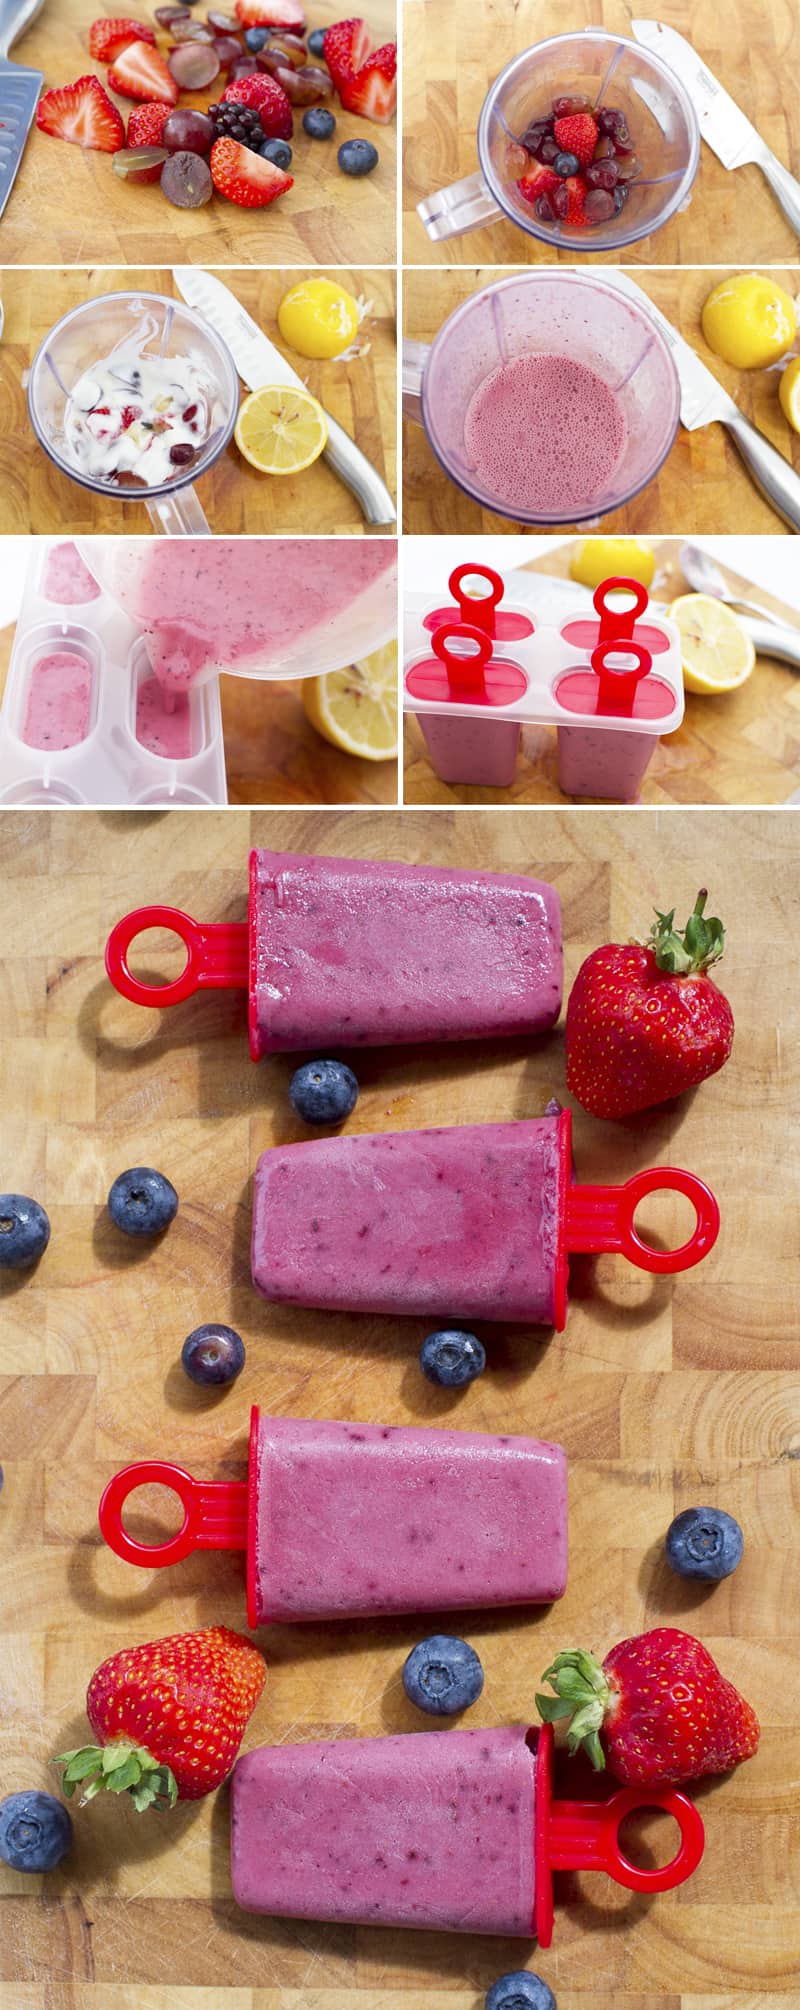 How To make smoothie popsicles DIY forest fruits DIY blog